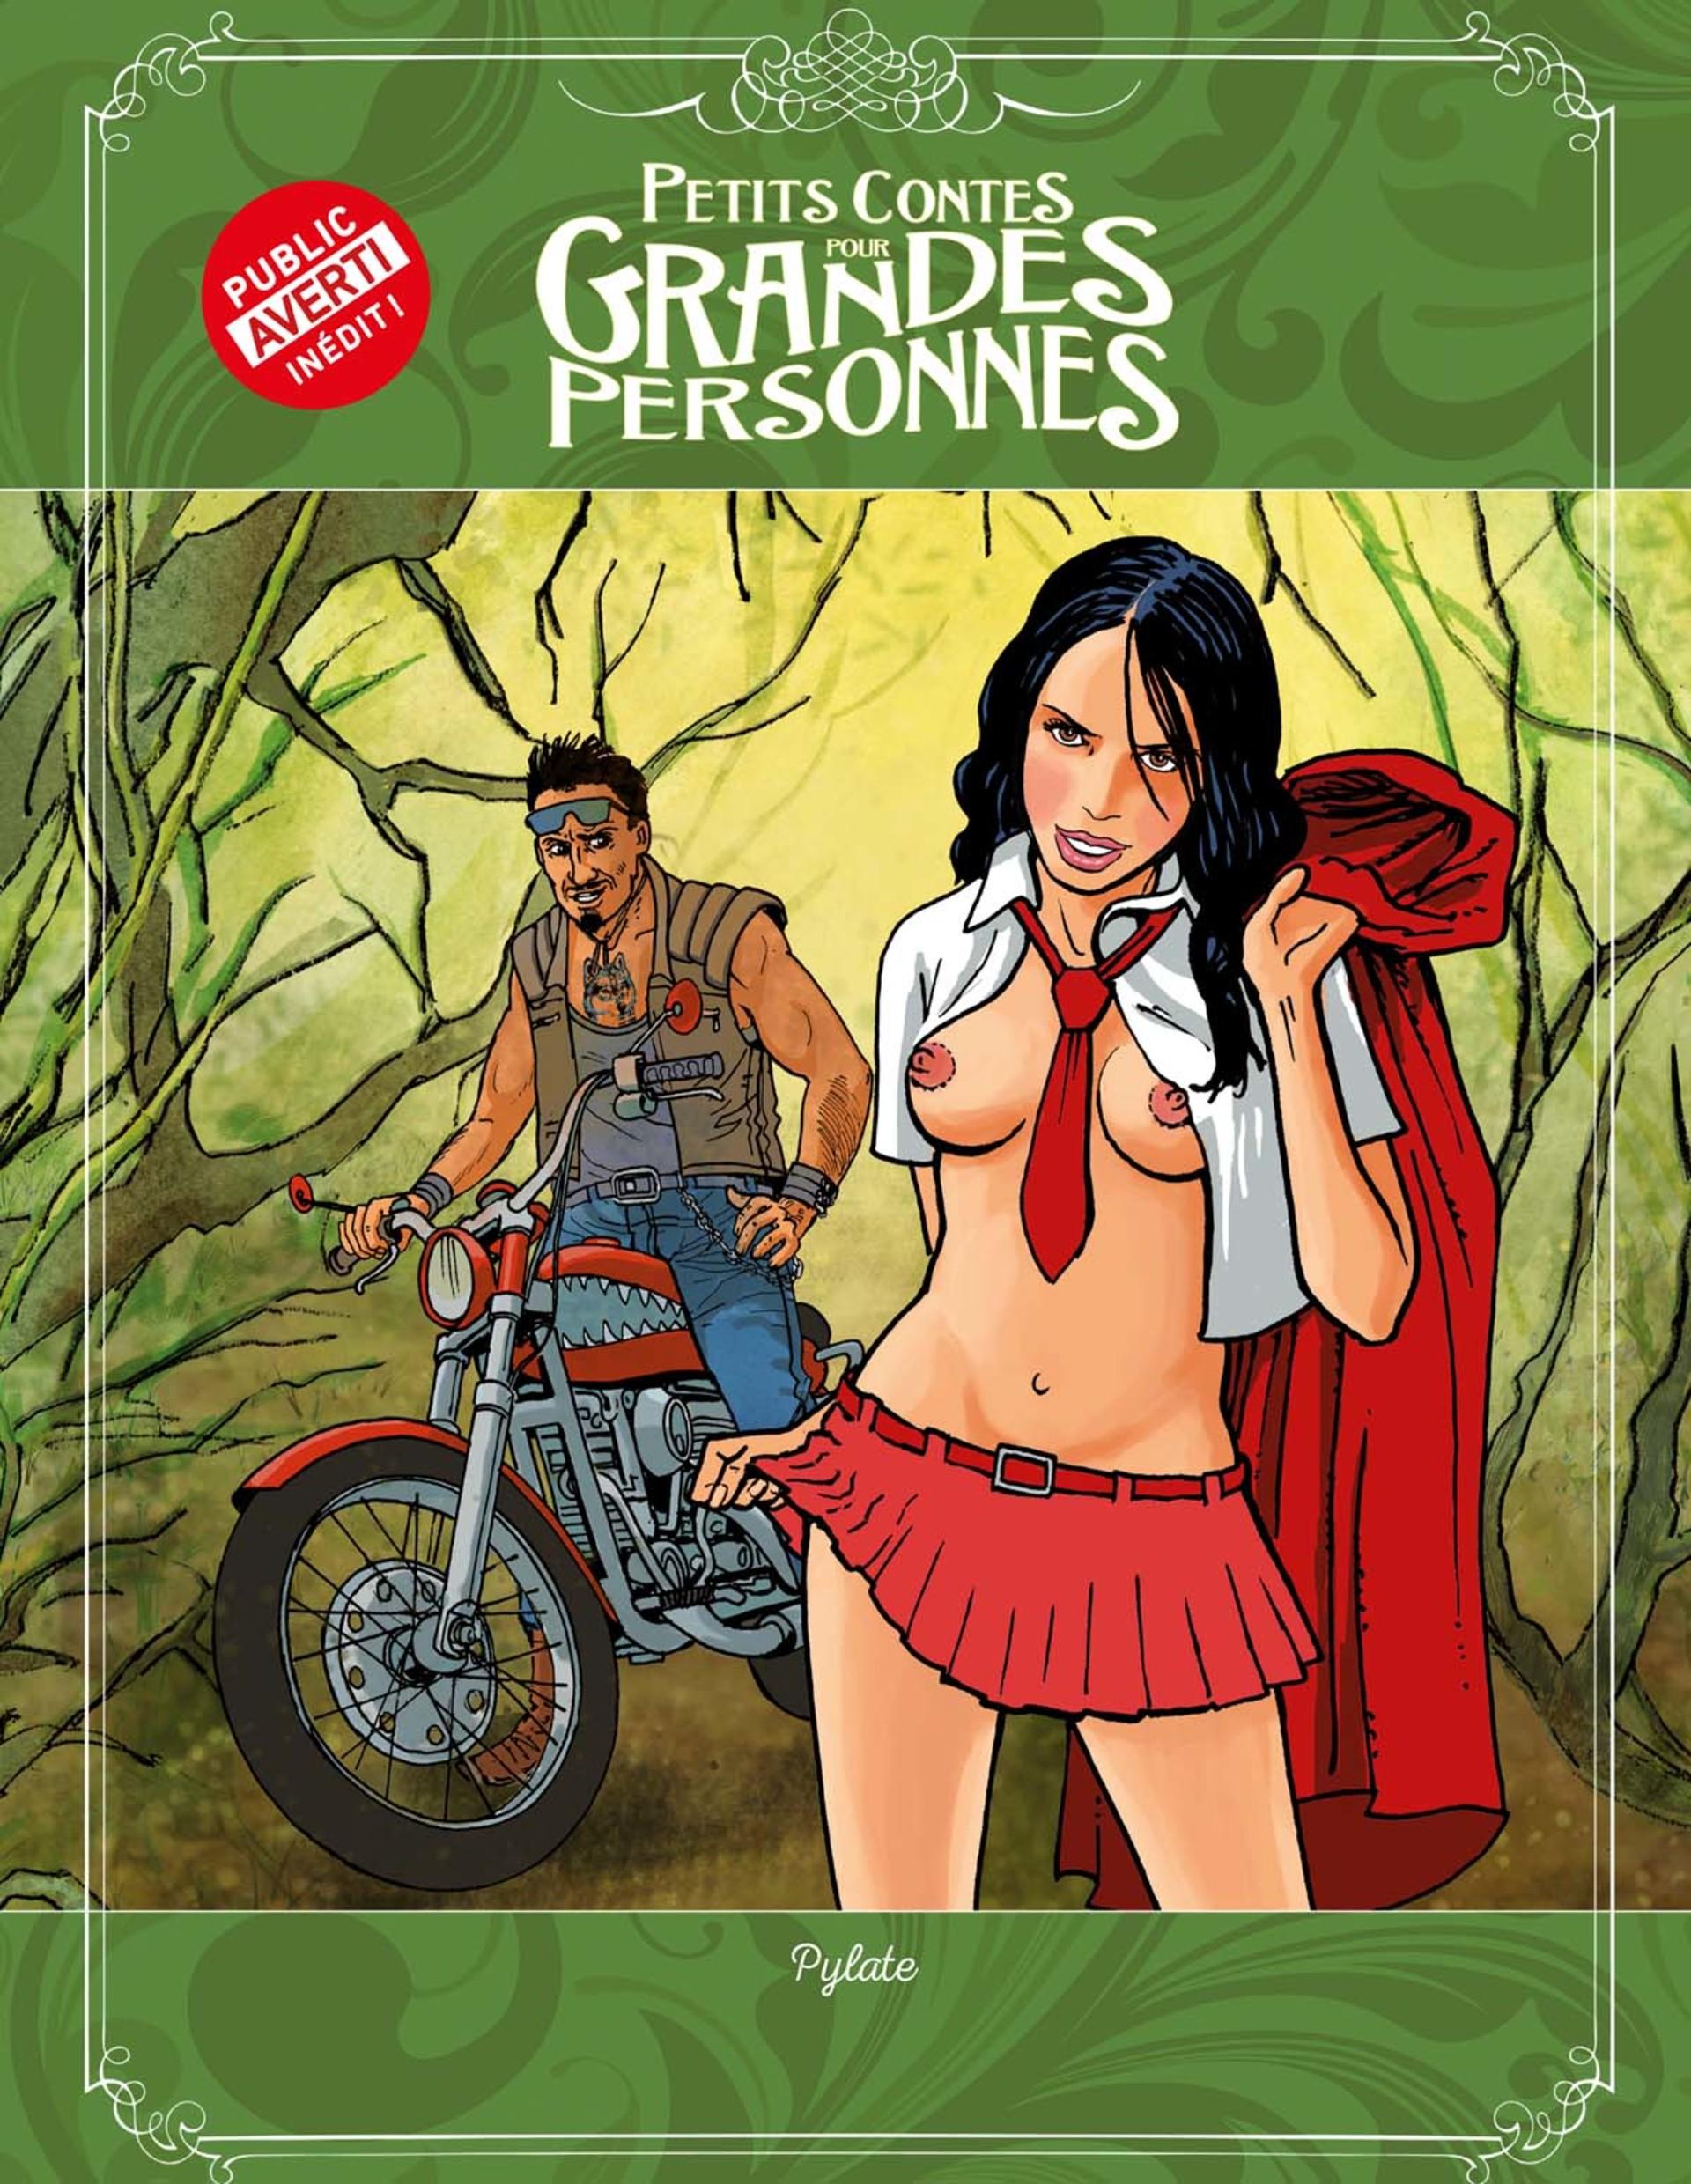 Pyllate - Petits contes pour grandes personnes (French) Porn Comics